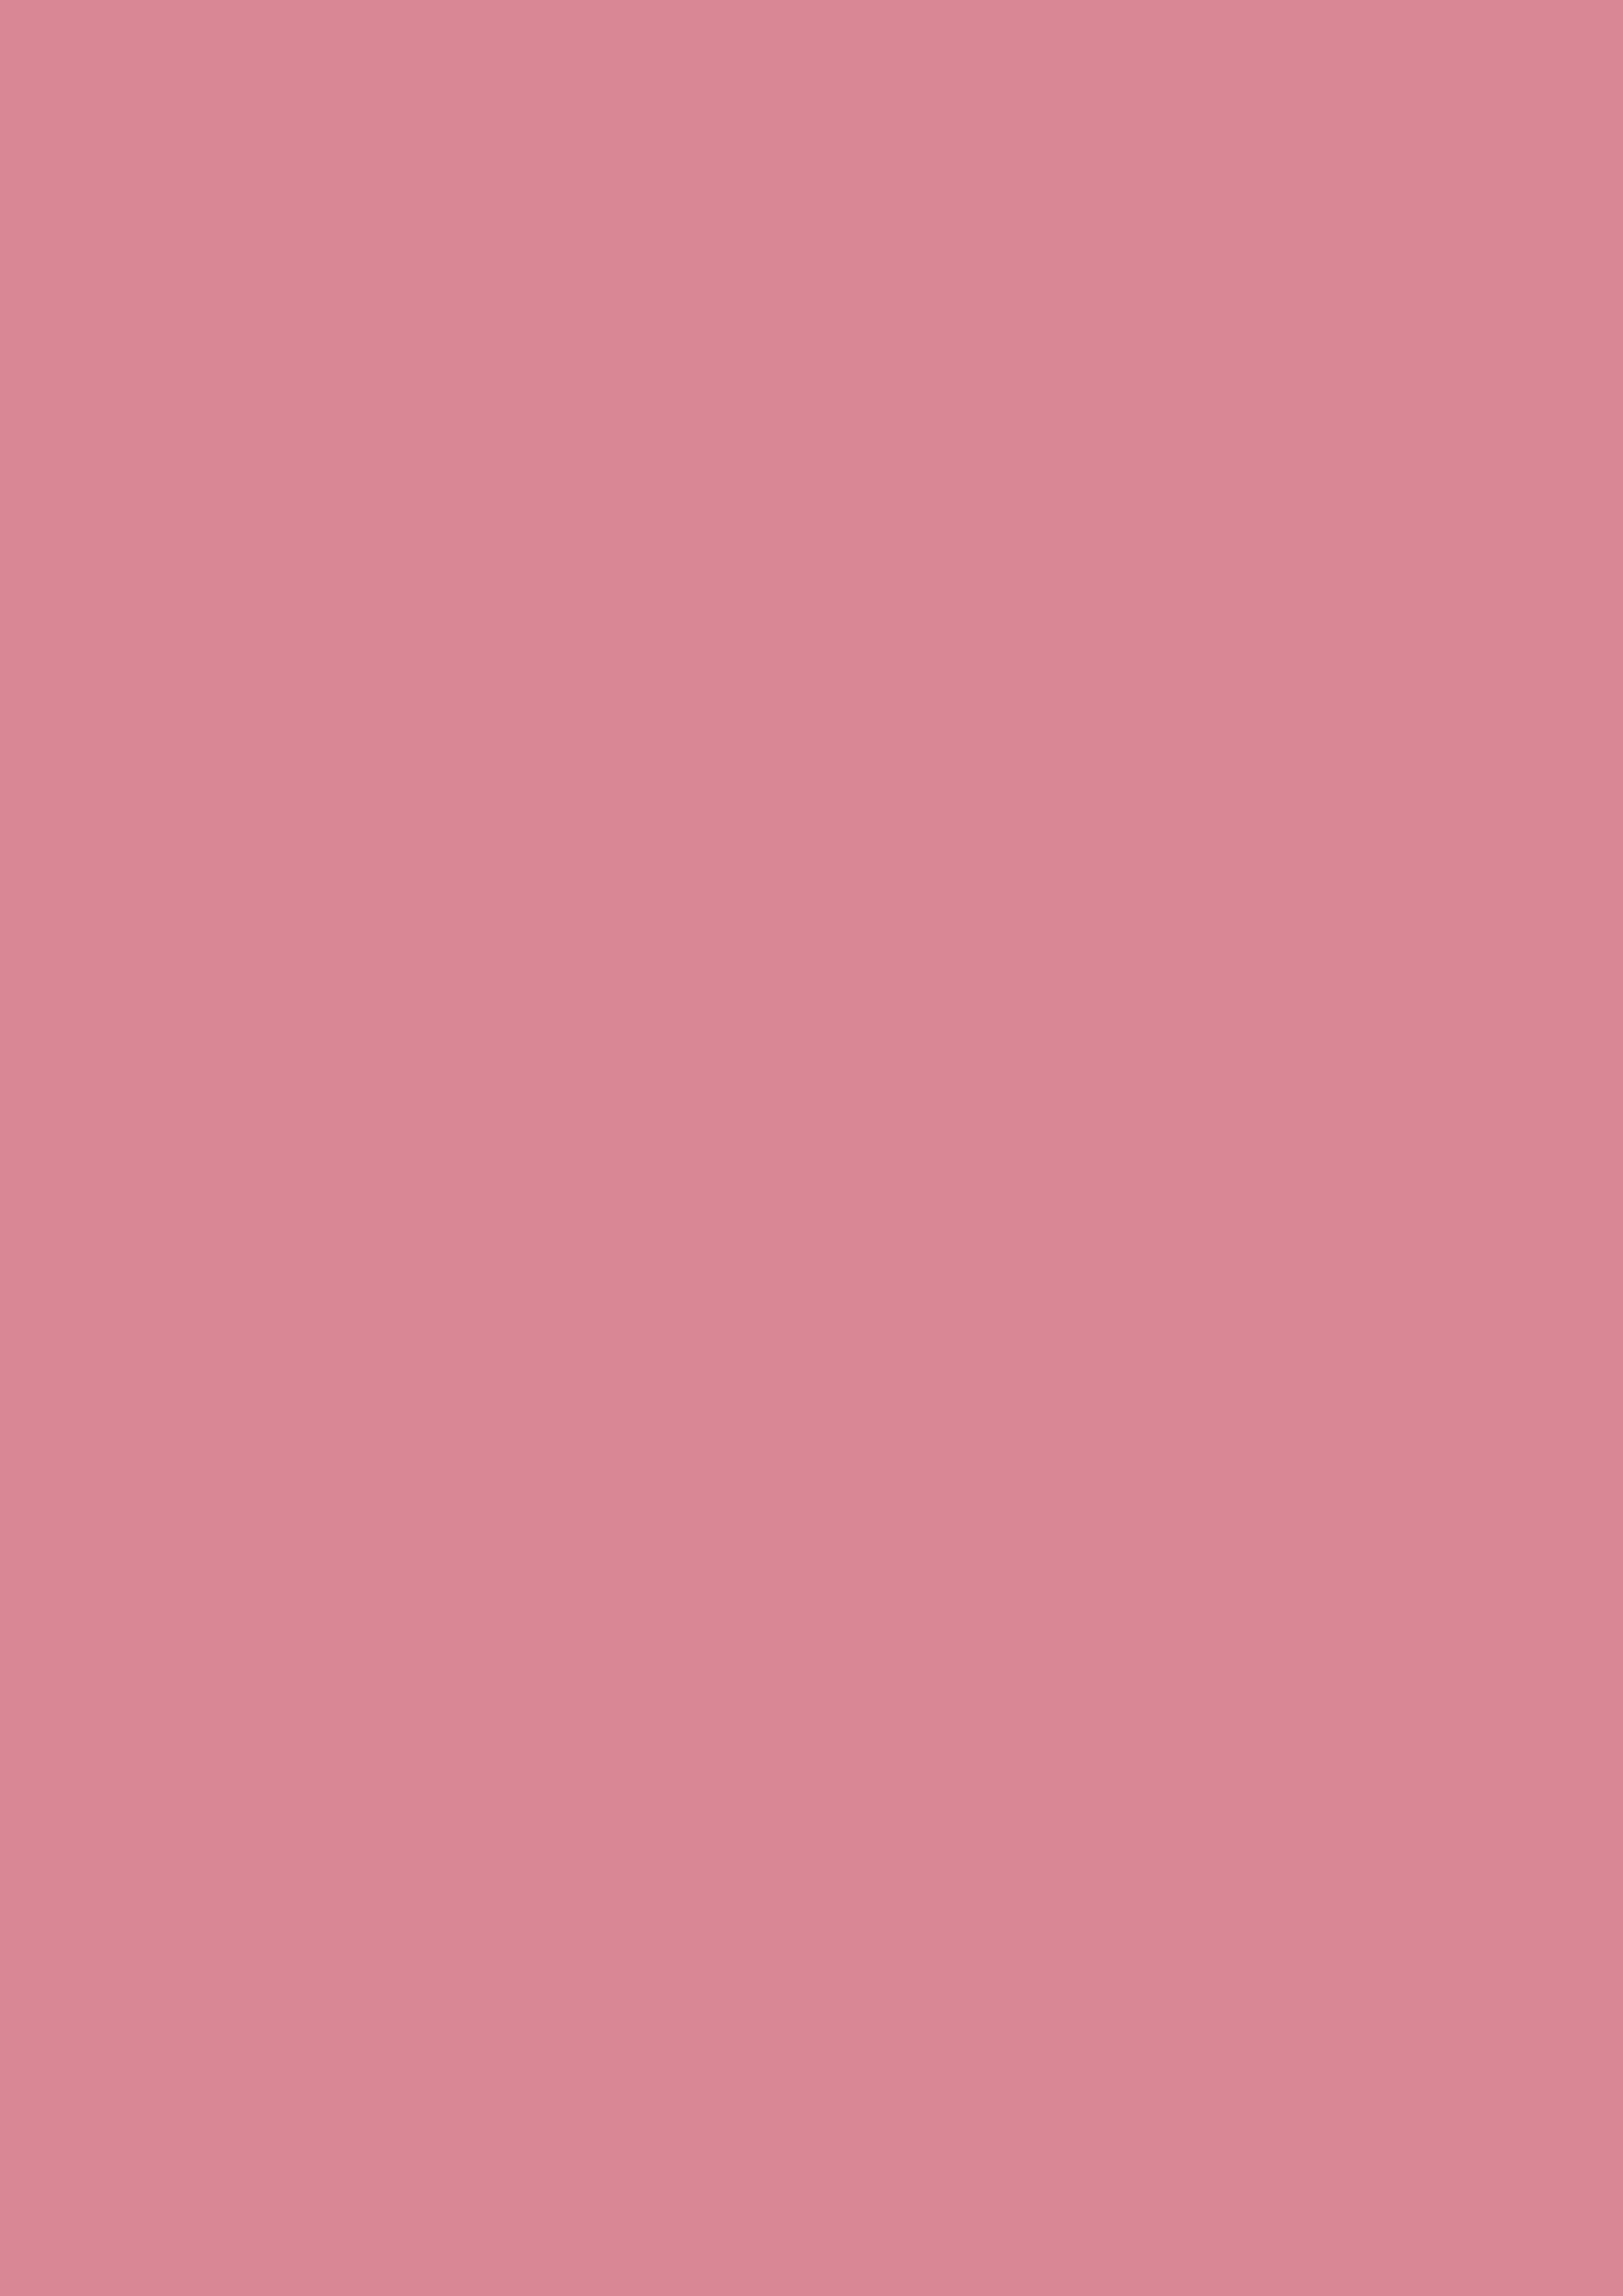 2480x3508 Shimmering Blush Solid Color Background